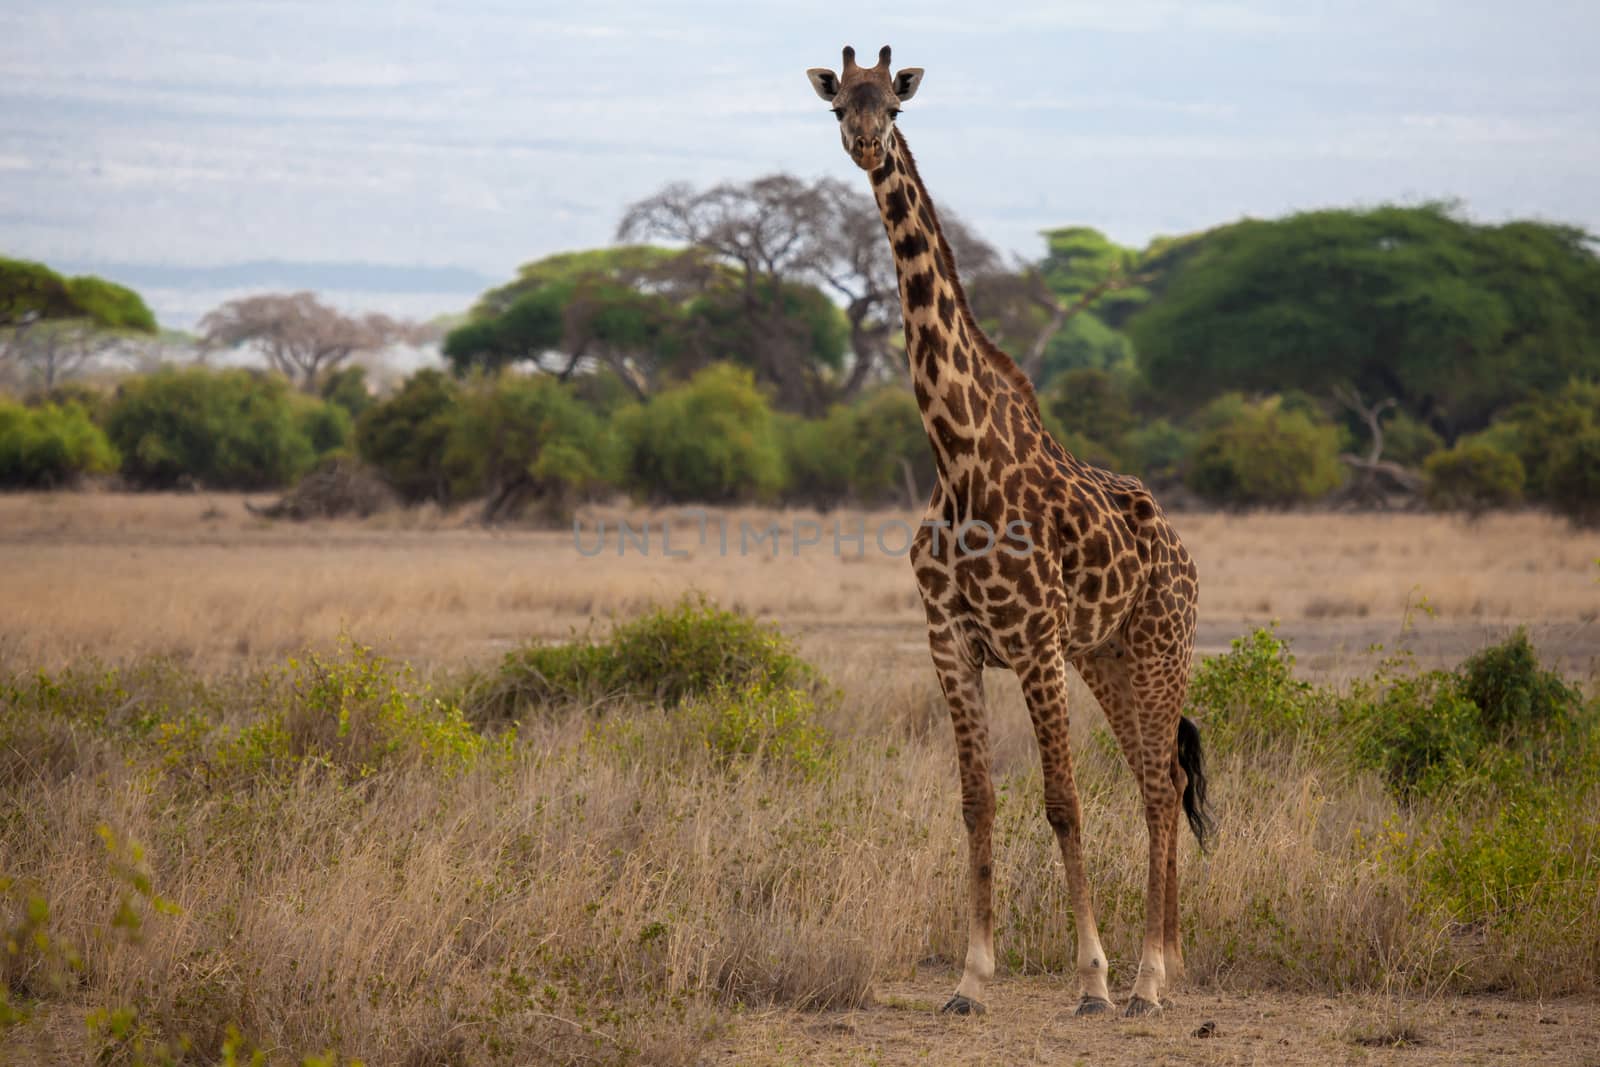 Giraffe is standing and watching in the savannah of Kenya by 25ehaag6